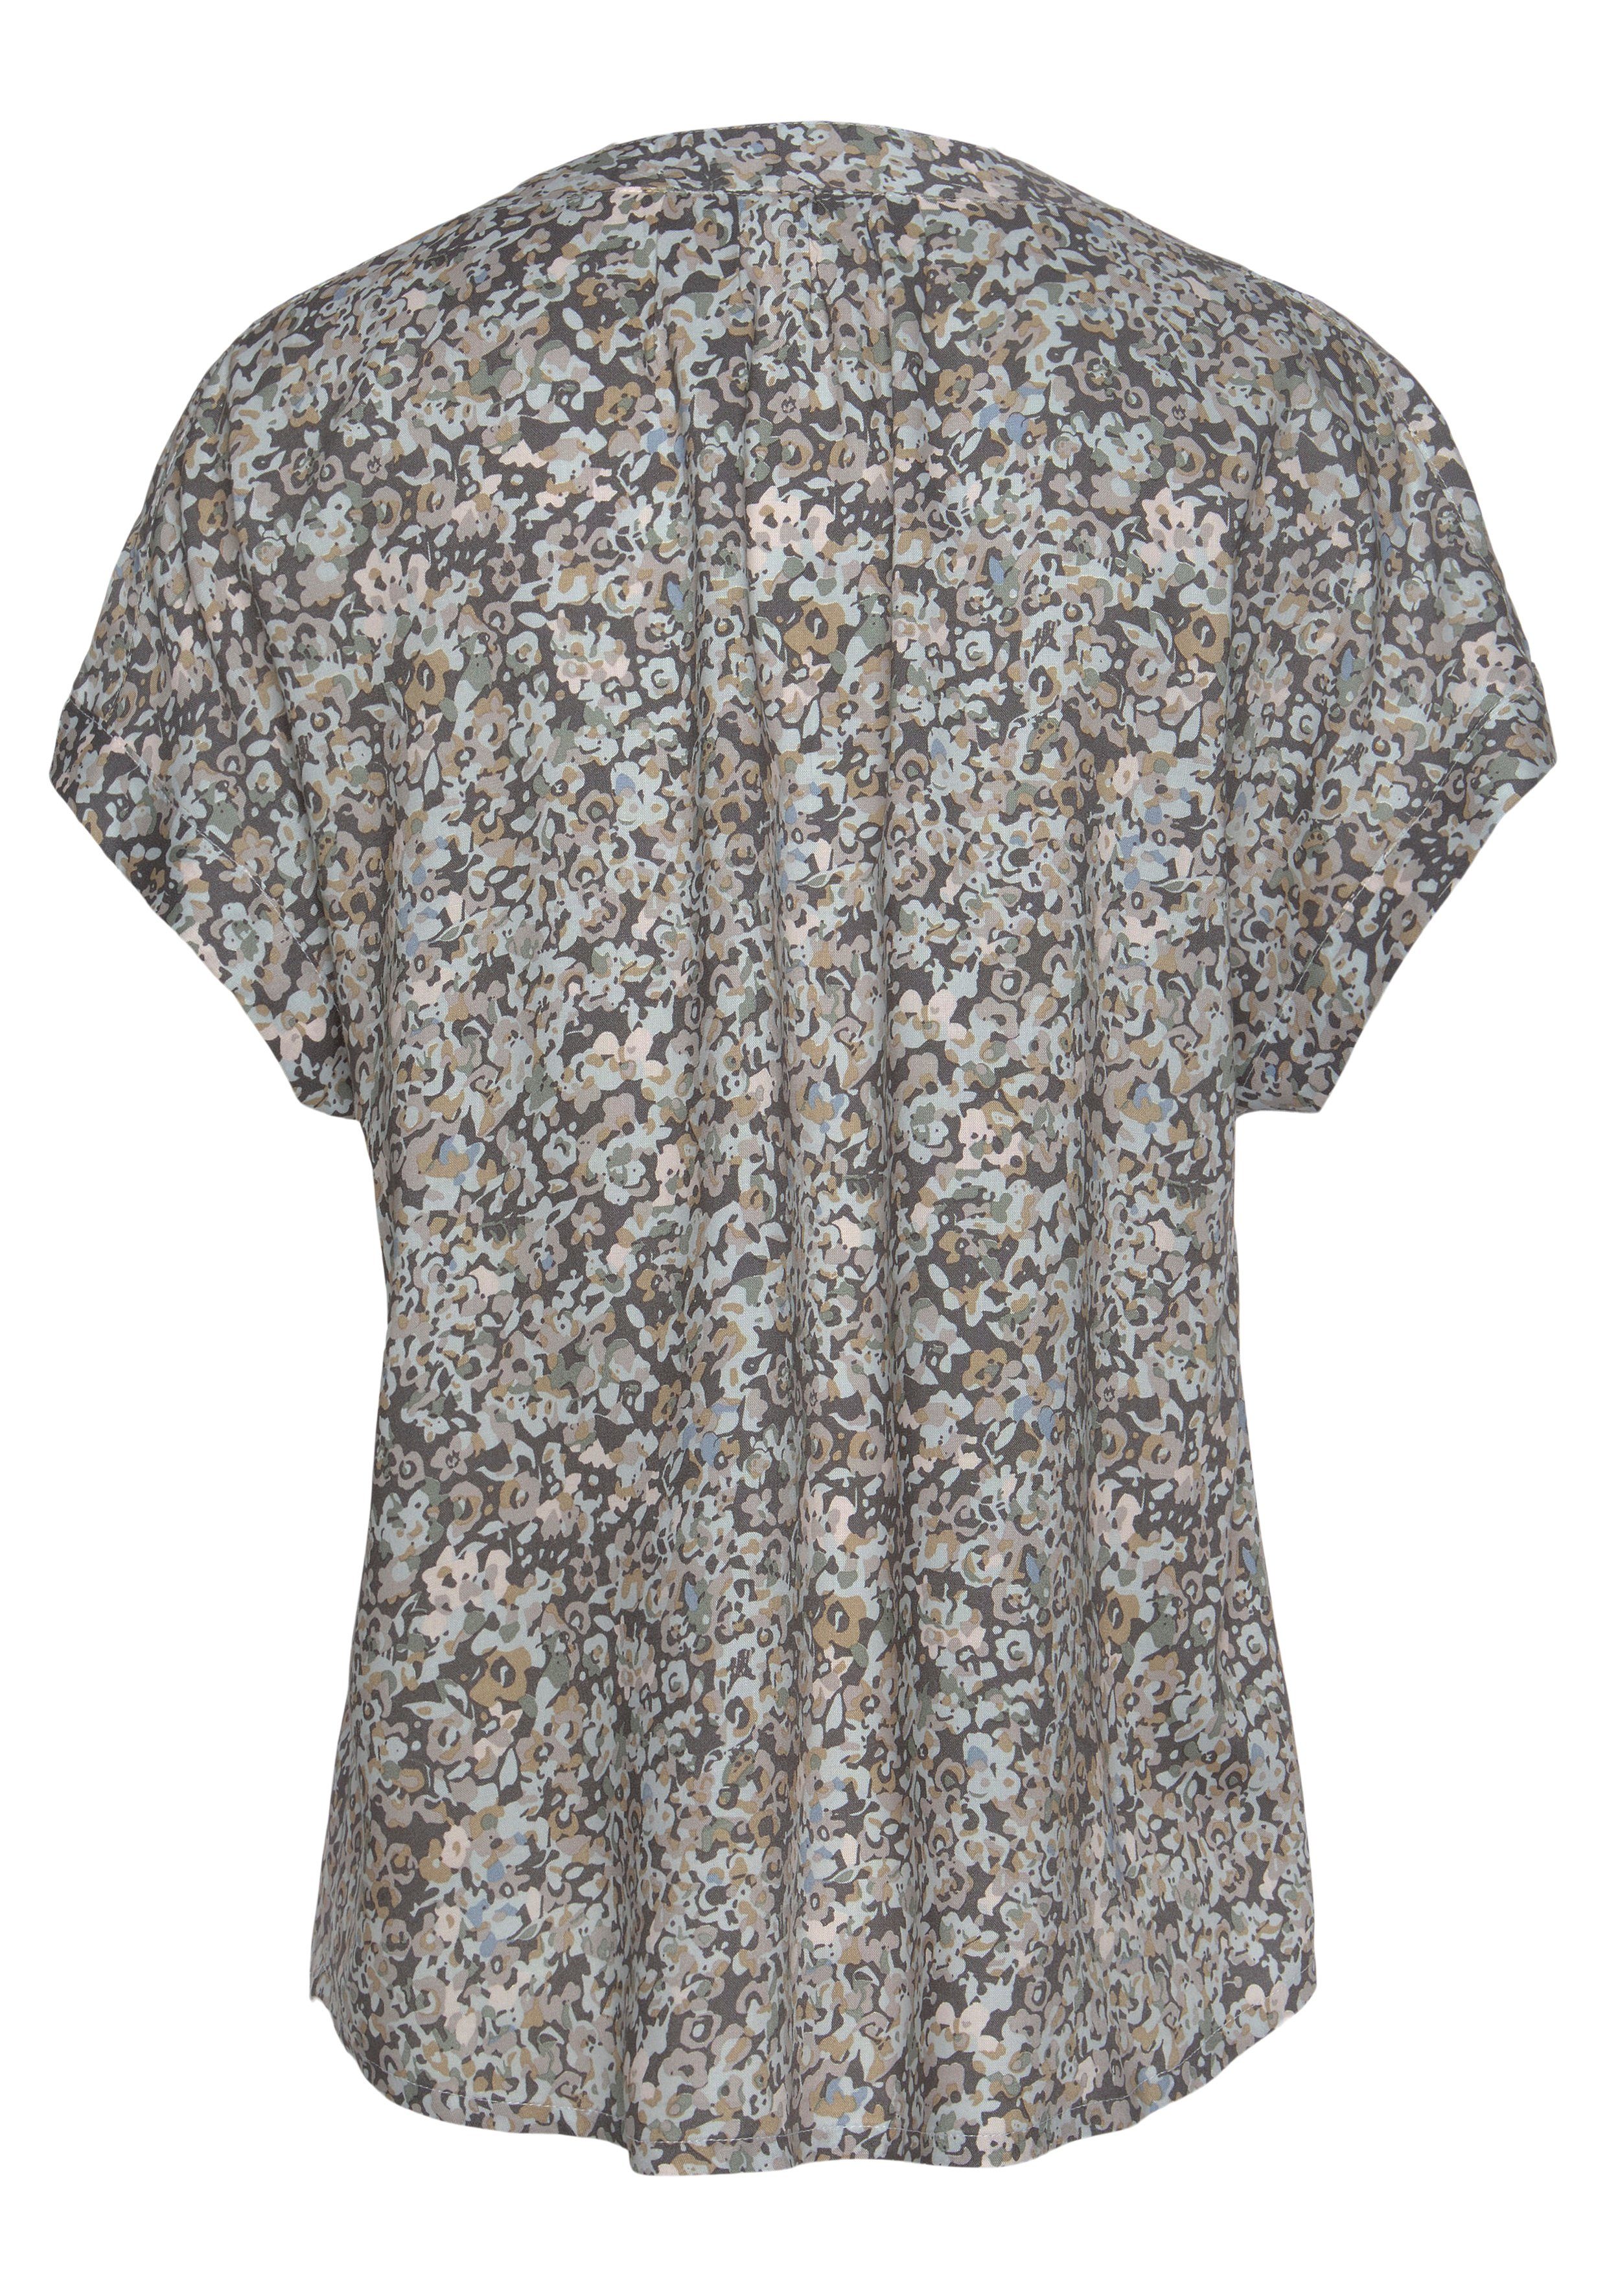 Vivance Kurzarmbluse mit Blümchendruck und V-Ausschnitt, Damenbluse Blusenshirt